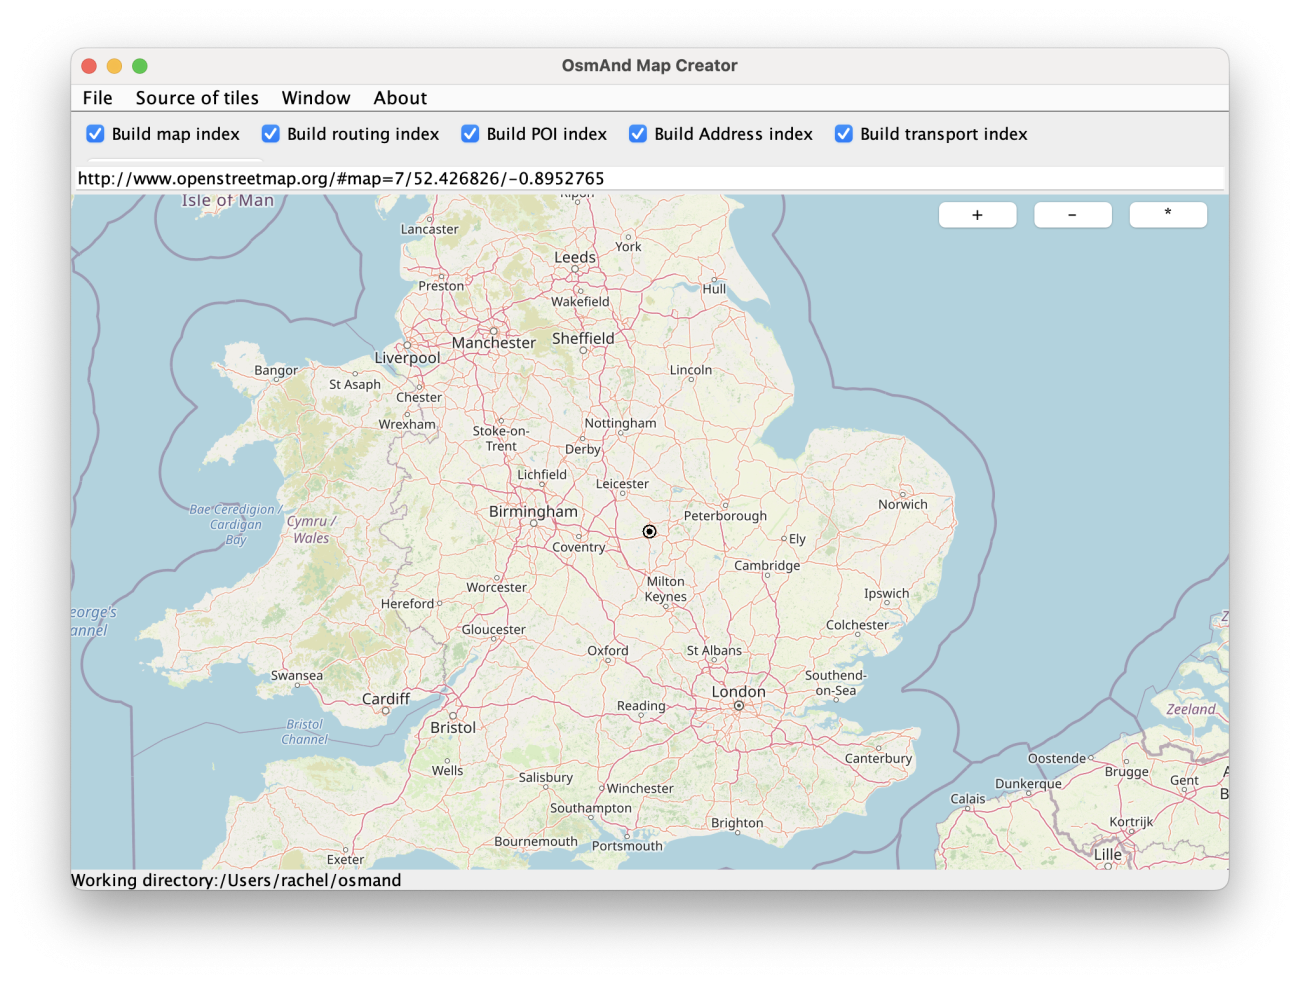 Screenshot of OsmAndMapCreator, showing a map of the UK